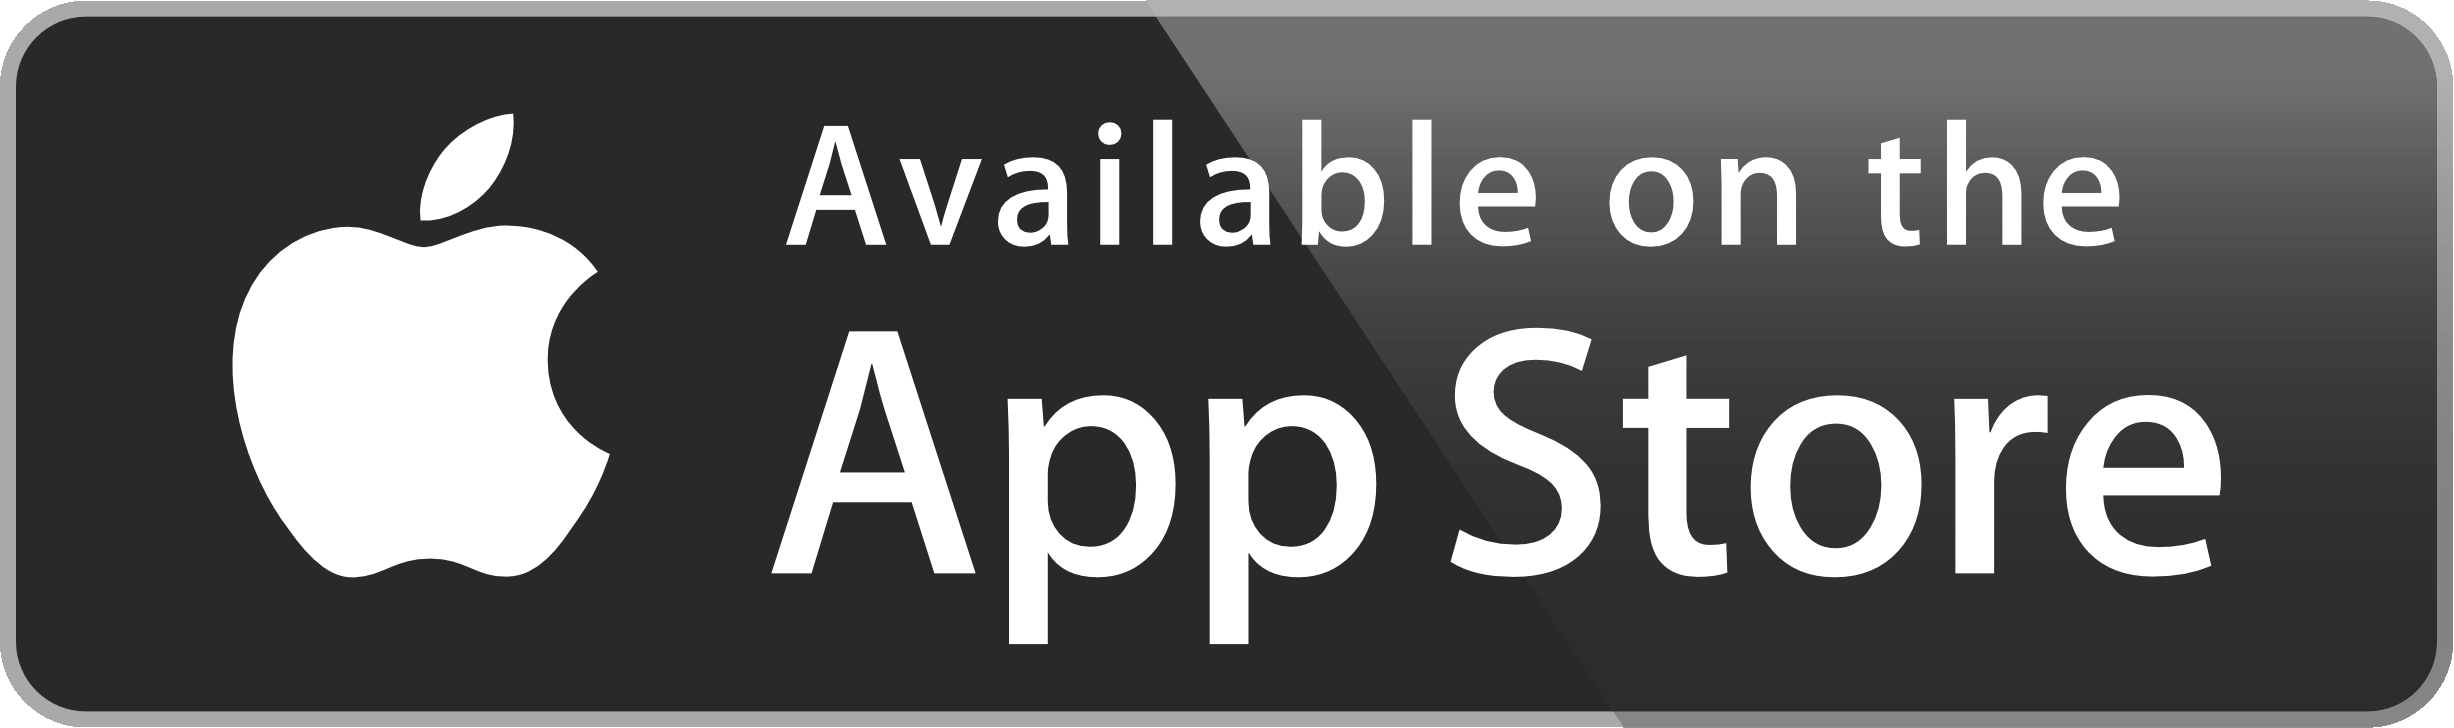 App Store Graphic